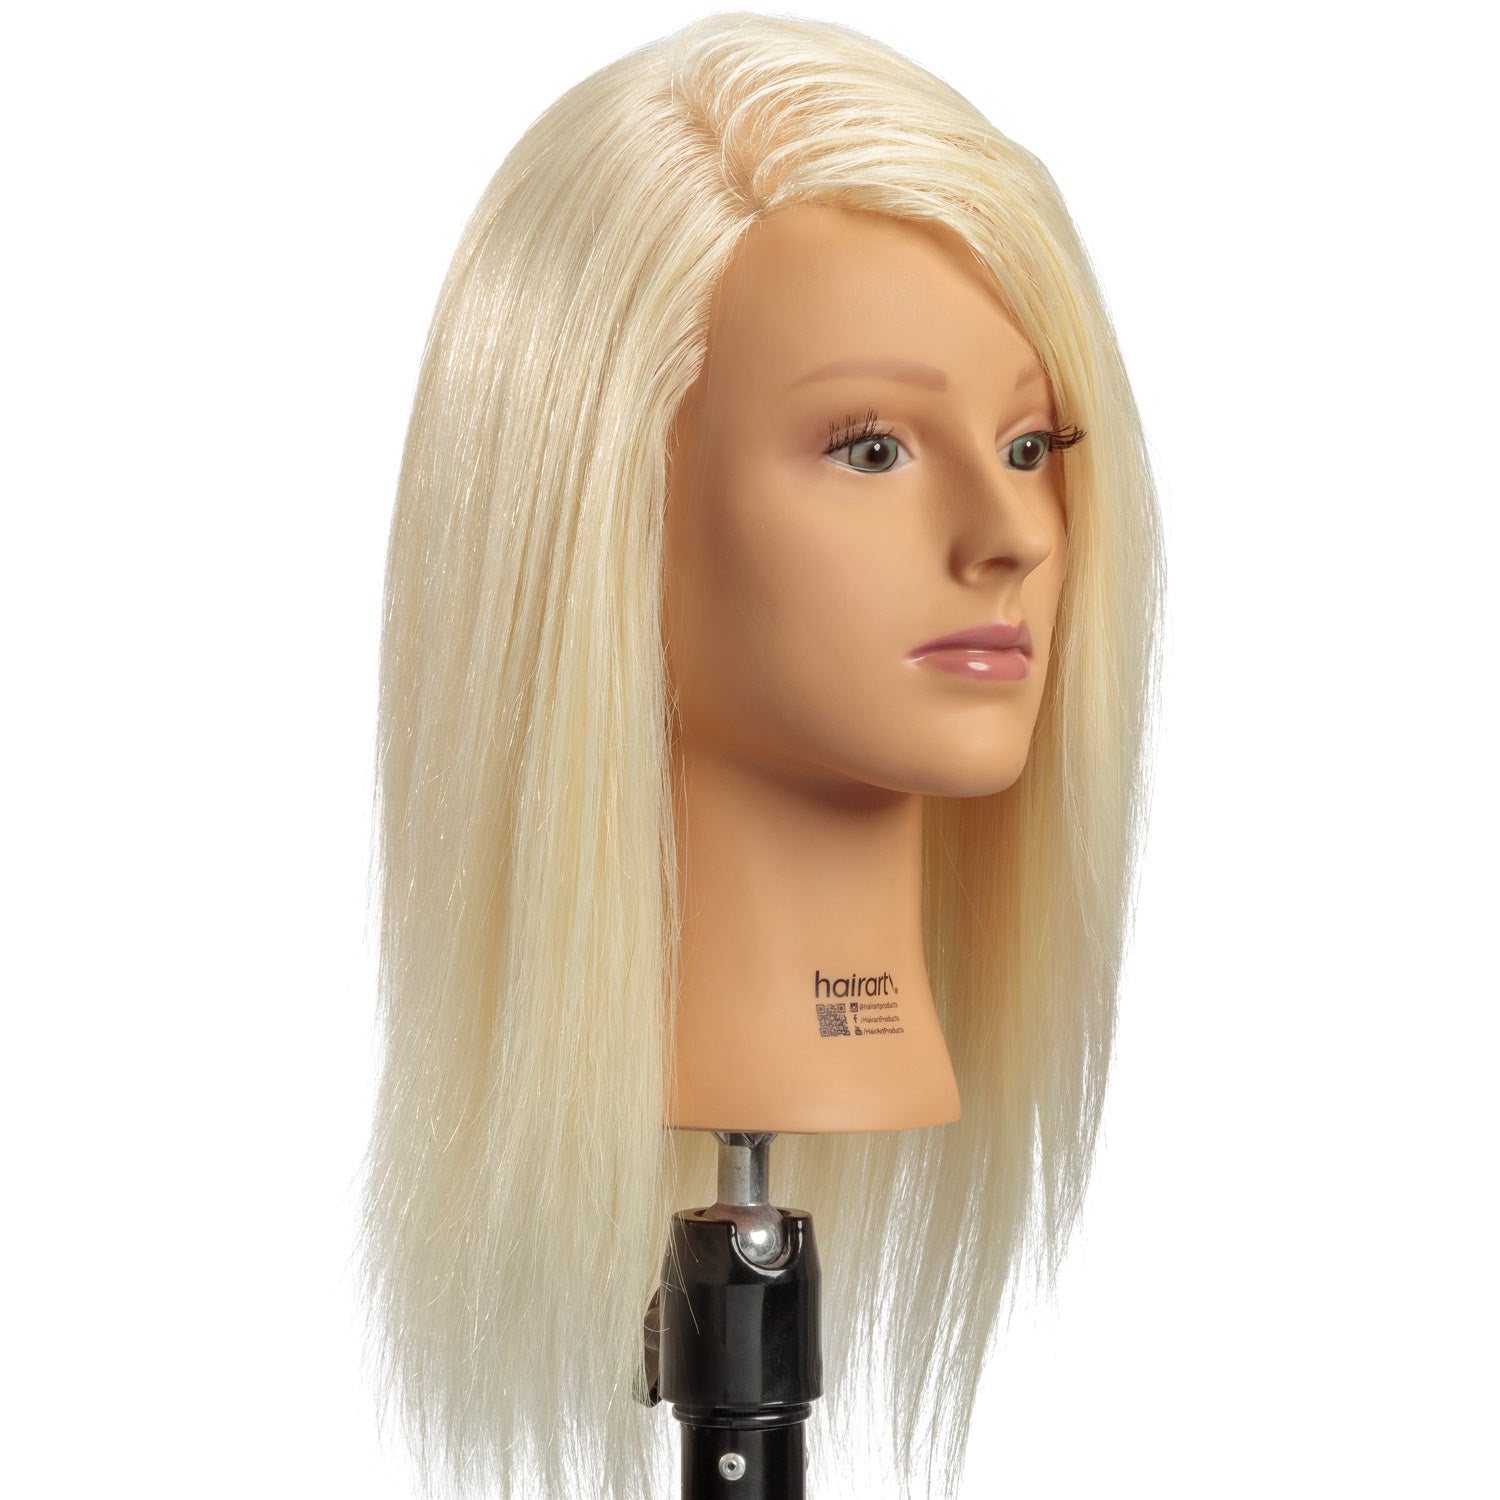 Burmax “Debra” mannequin head for hair styling.